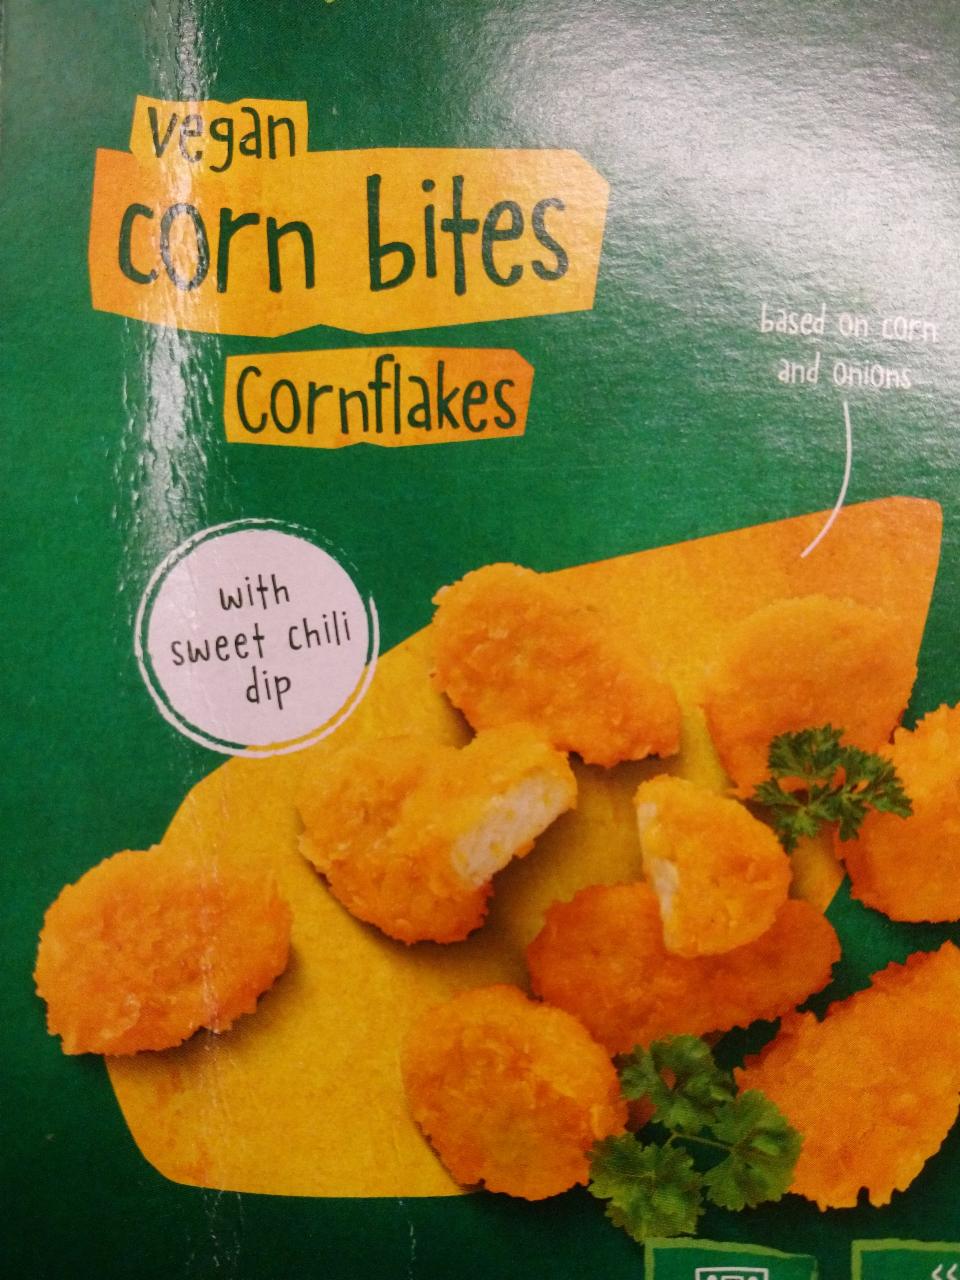 Fotografie - Vemondo corn bites cornflakes vegan